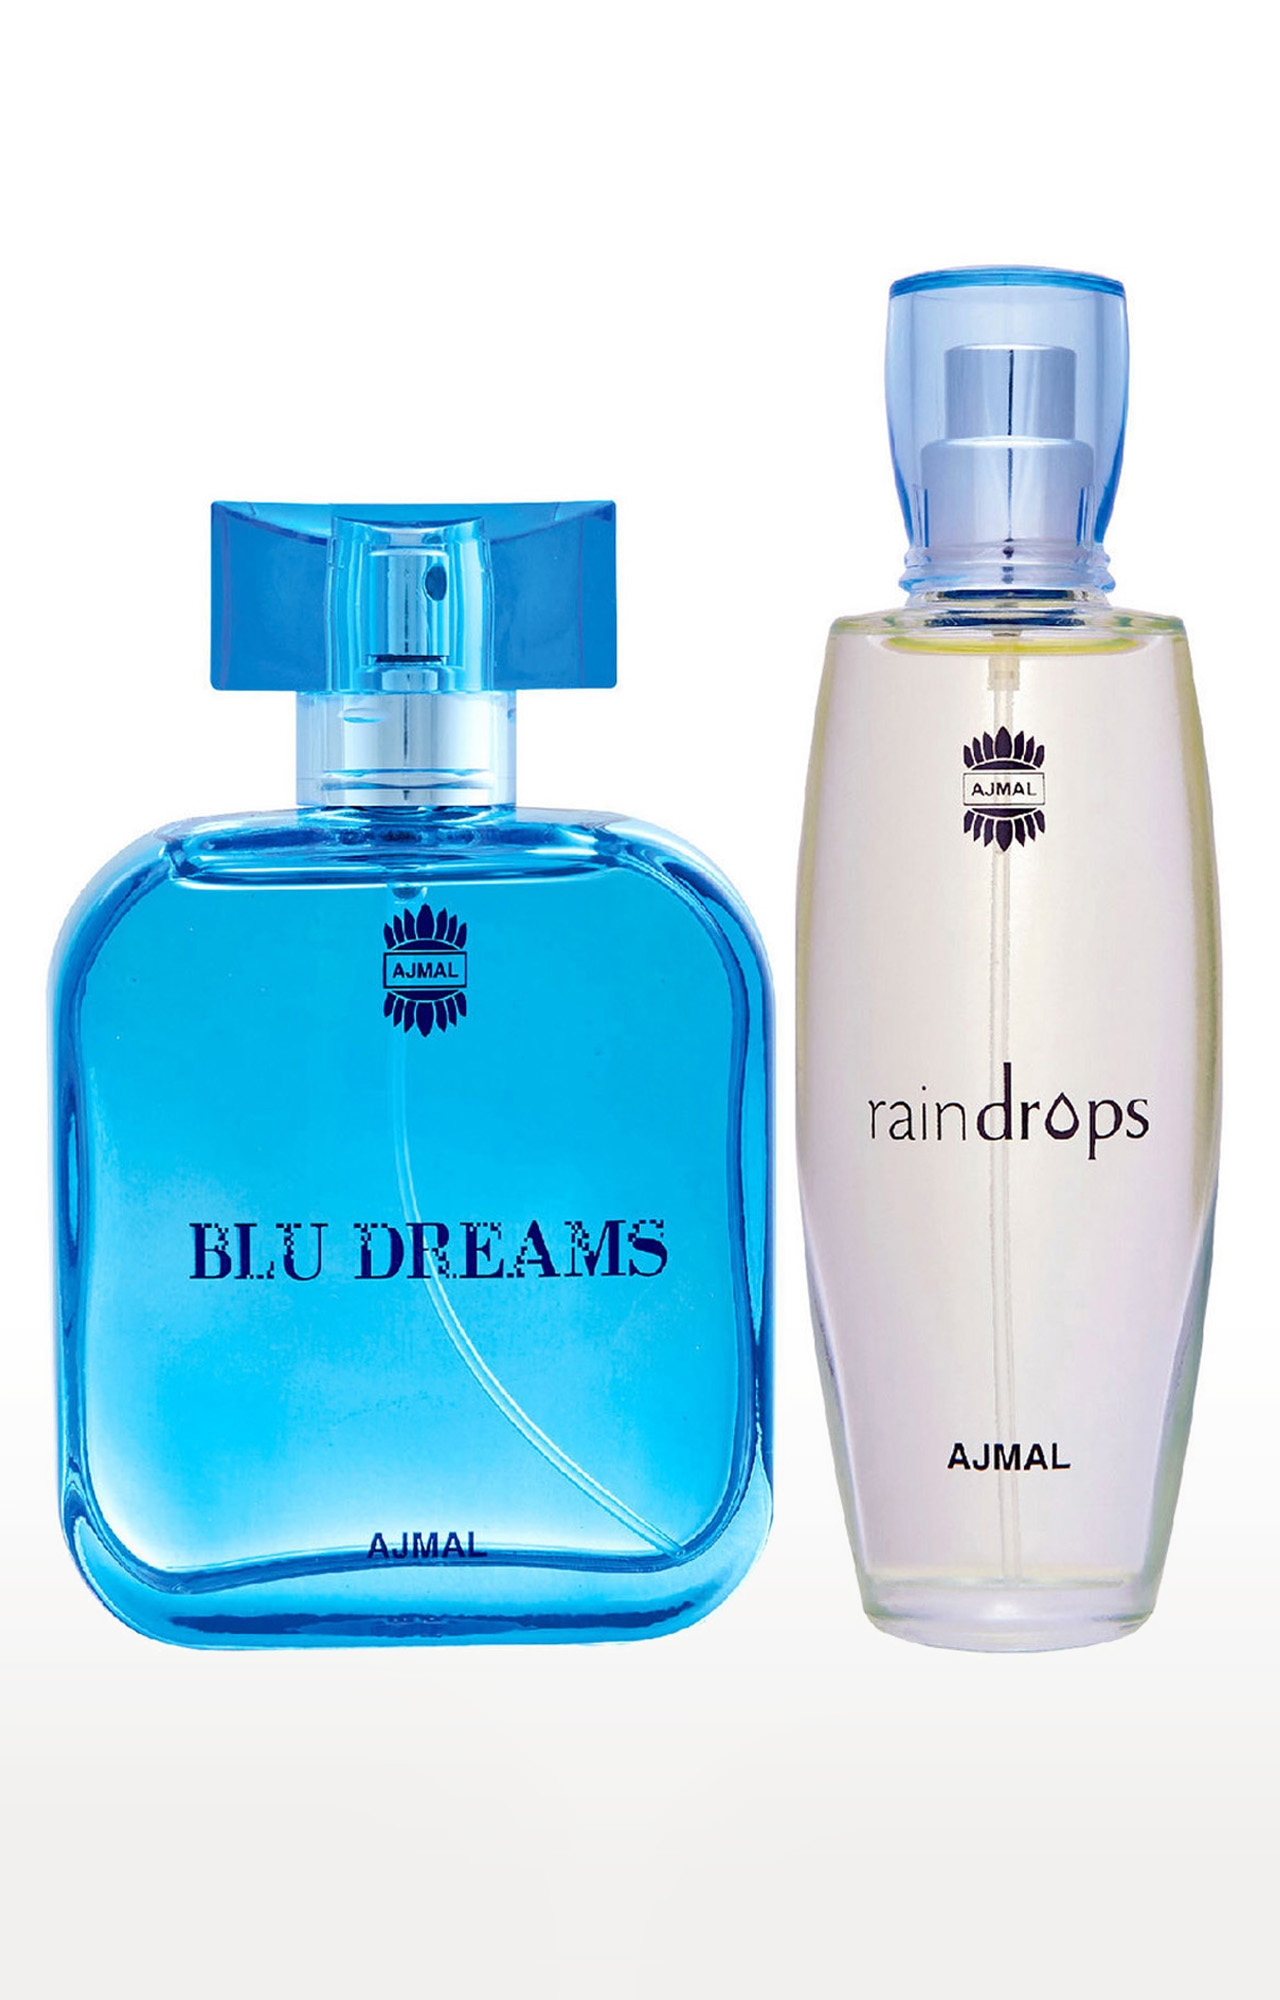 Ajmal Blu Dreams EDP Citurs Fruity Perfume 100ml for Men and Raindrops EDP Perfume 50ml for Women